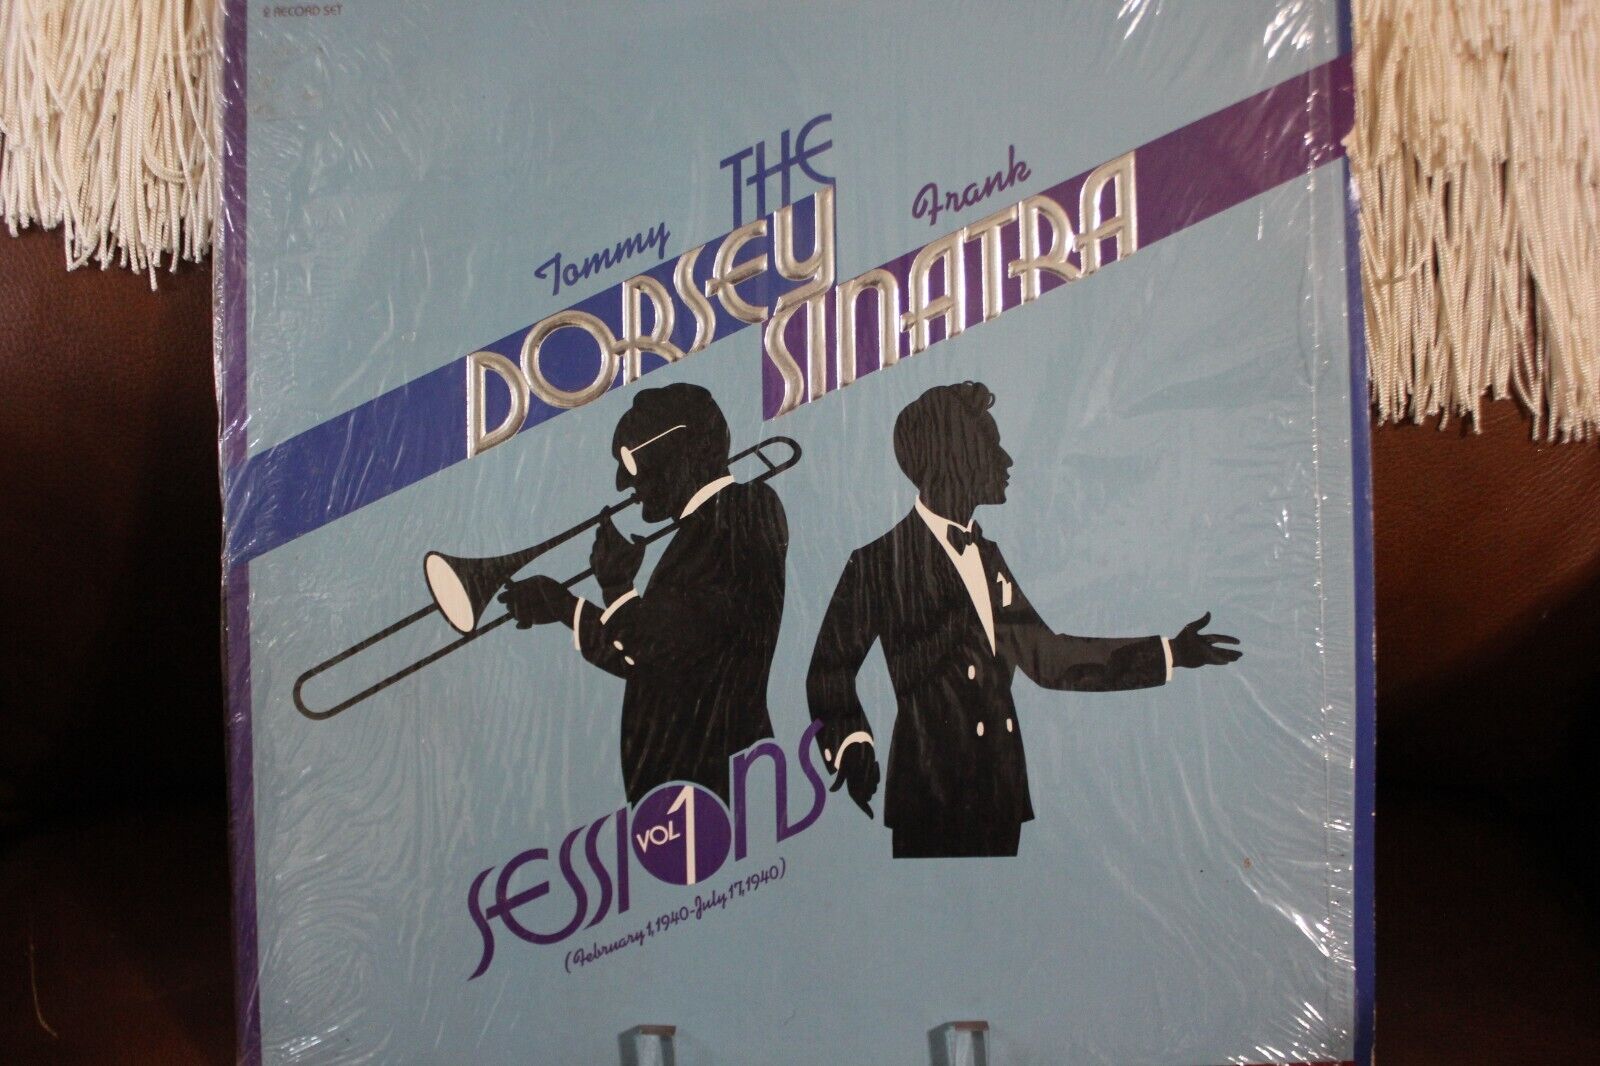 Tommy Dorsey/Frank Sinatra Sessions 1982 Vol 1 RCA 2 LP's Cover VG Vinyl VG